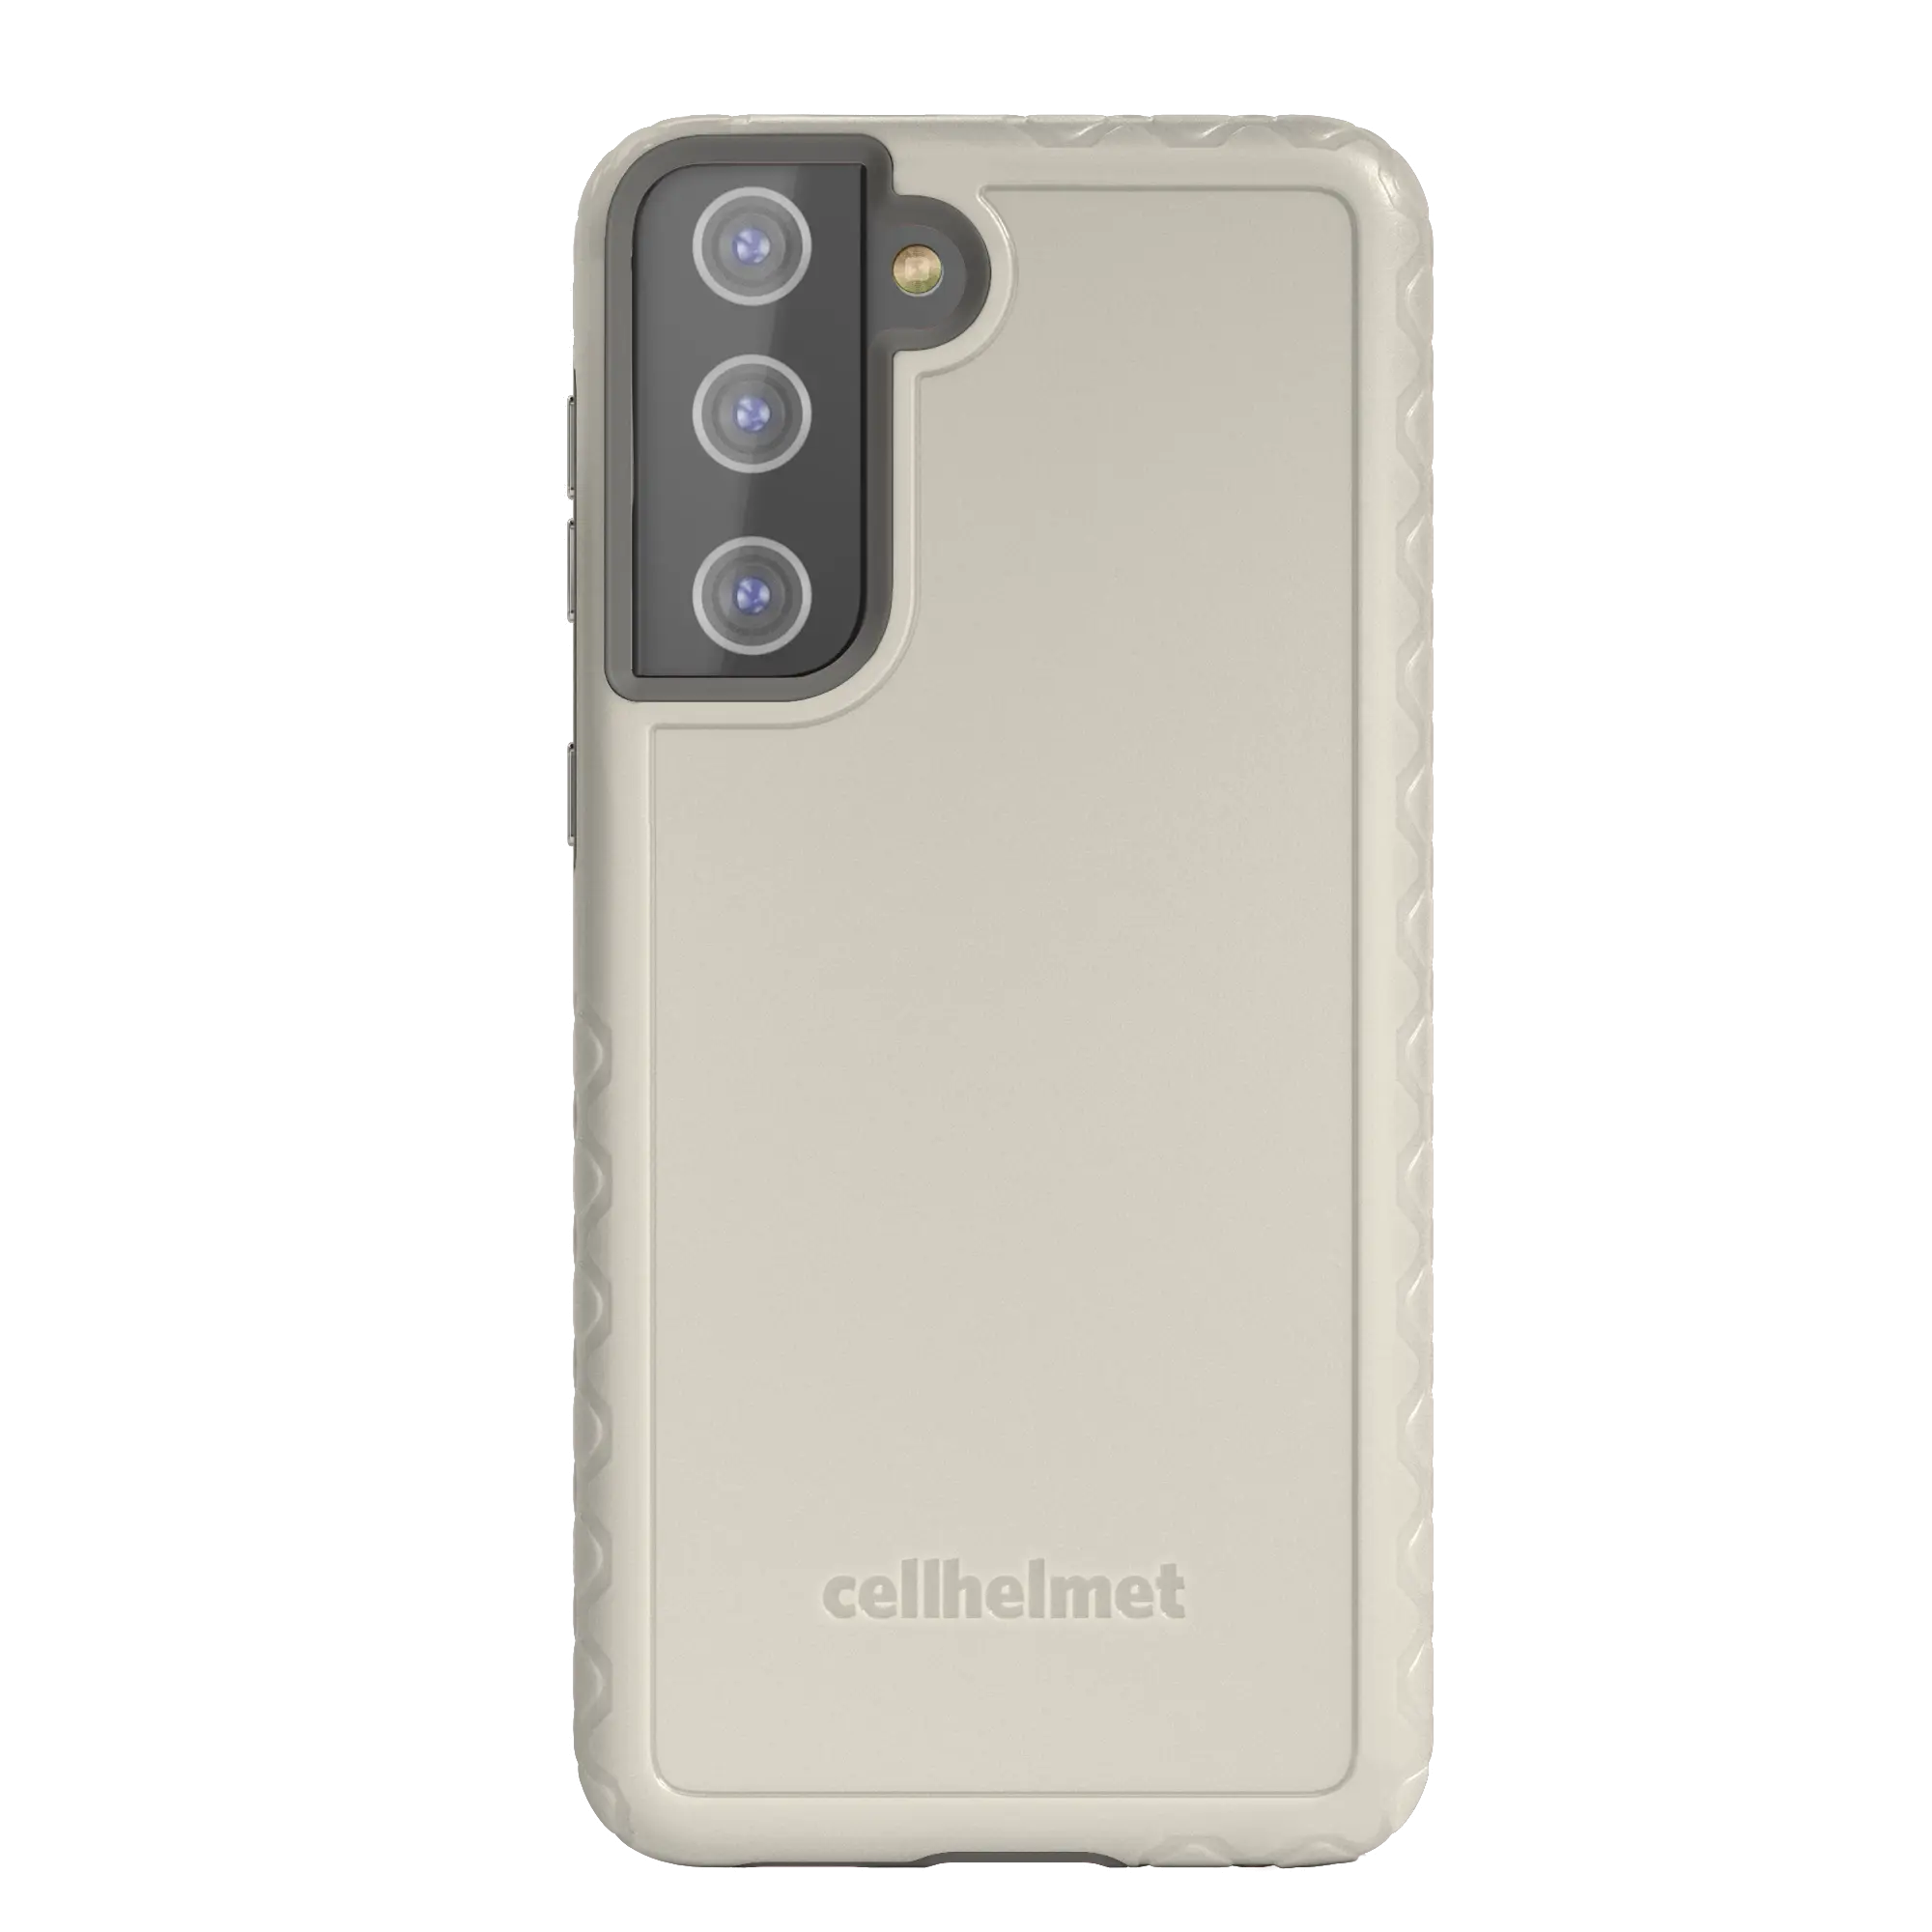 Gray cellhelmet Customizable Case for Galaxy S21